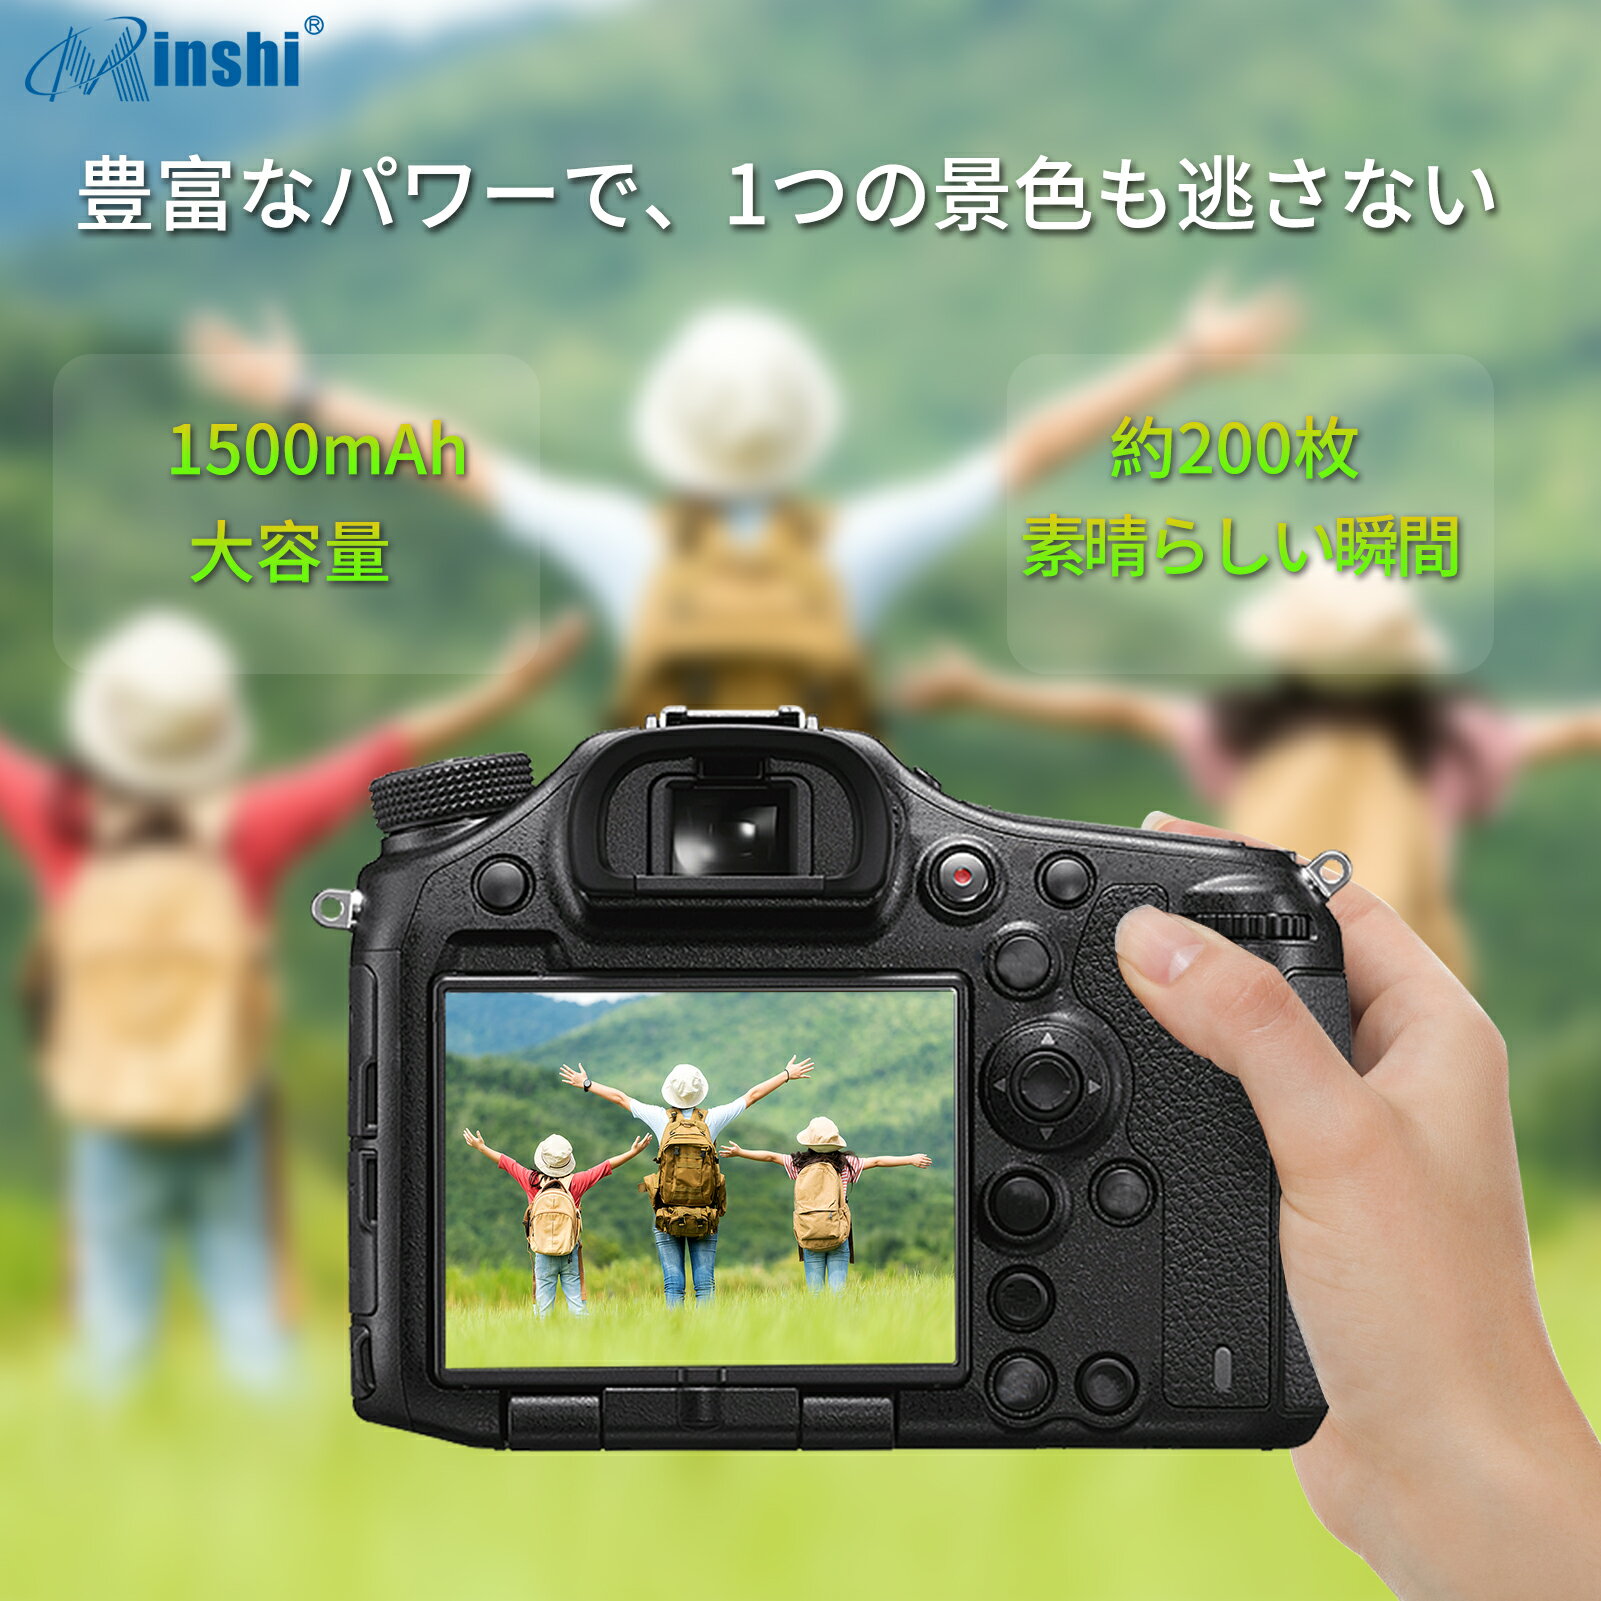 minshi 新品 Canon ELPH 500 HS 互換バッテリー 1500mAh XAB 高品質交換用リチャージブル カメラバッテリー リチウムイオンバッテリー デジタルカメラ デジカメ 充電池 PSE認証 1年間保証 予備バッテリー 3